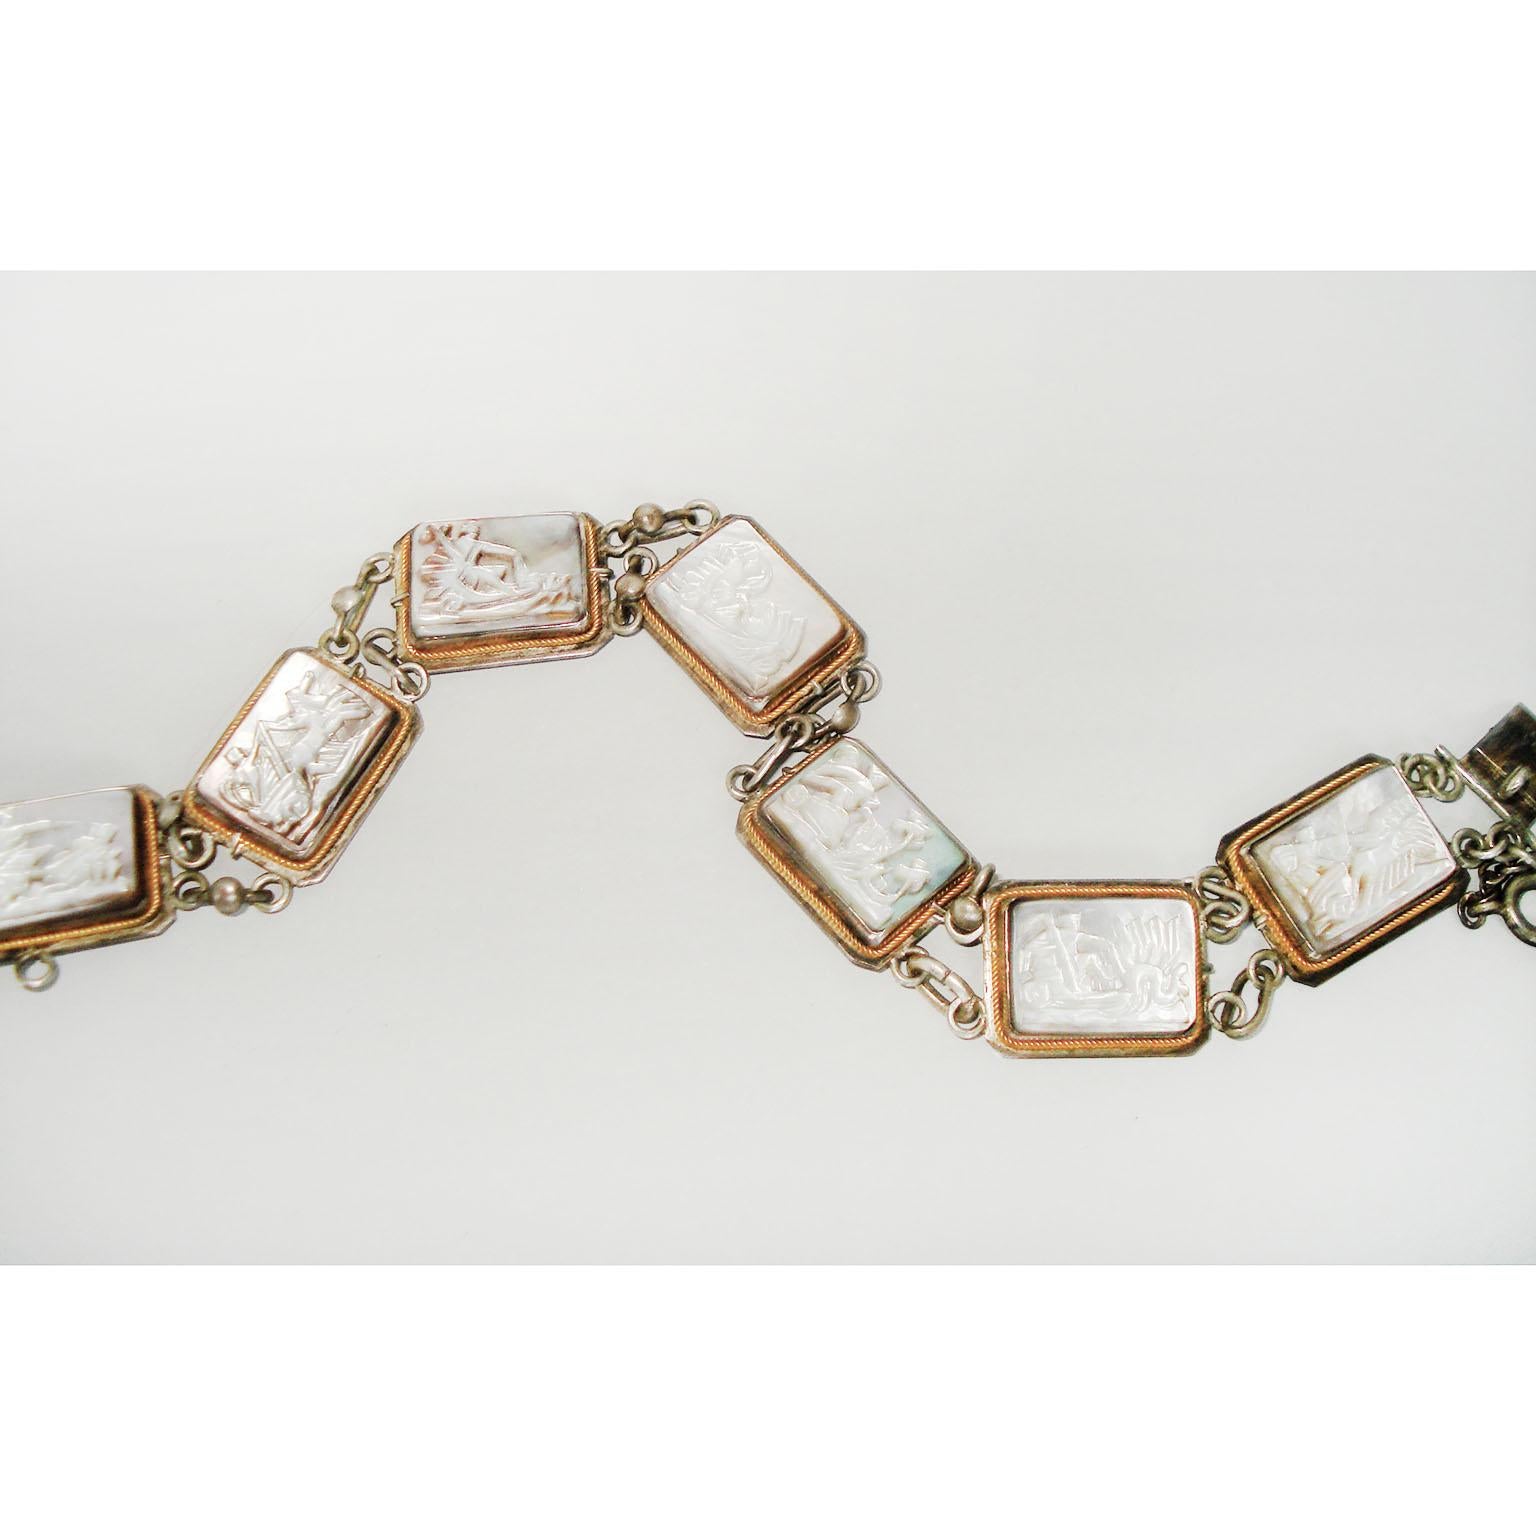 Art Deco Seven Days Silver Bracelet with Chariots Motif 6